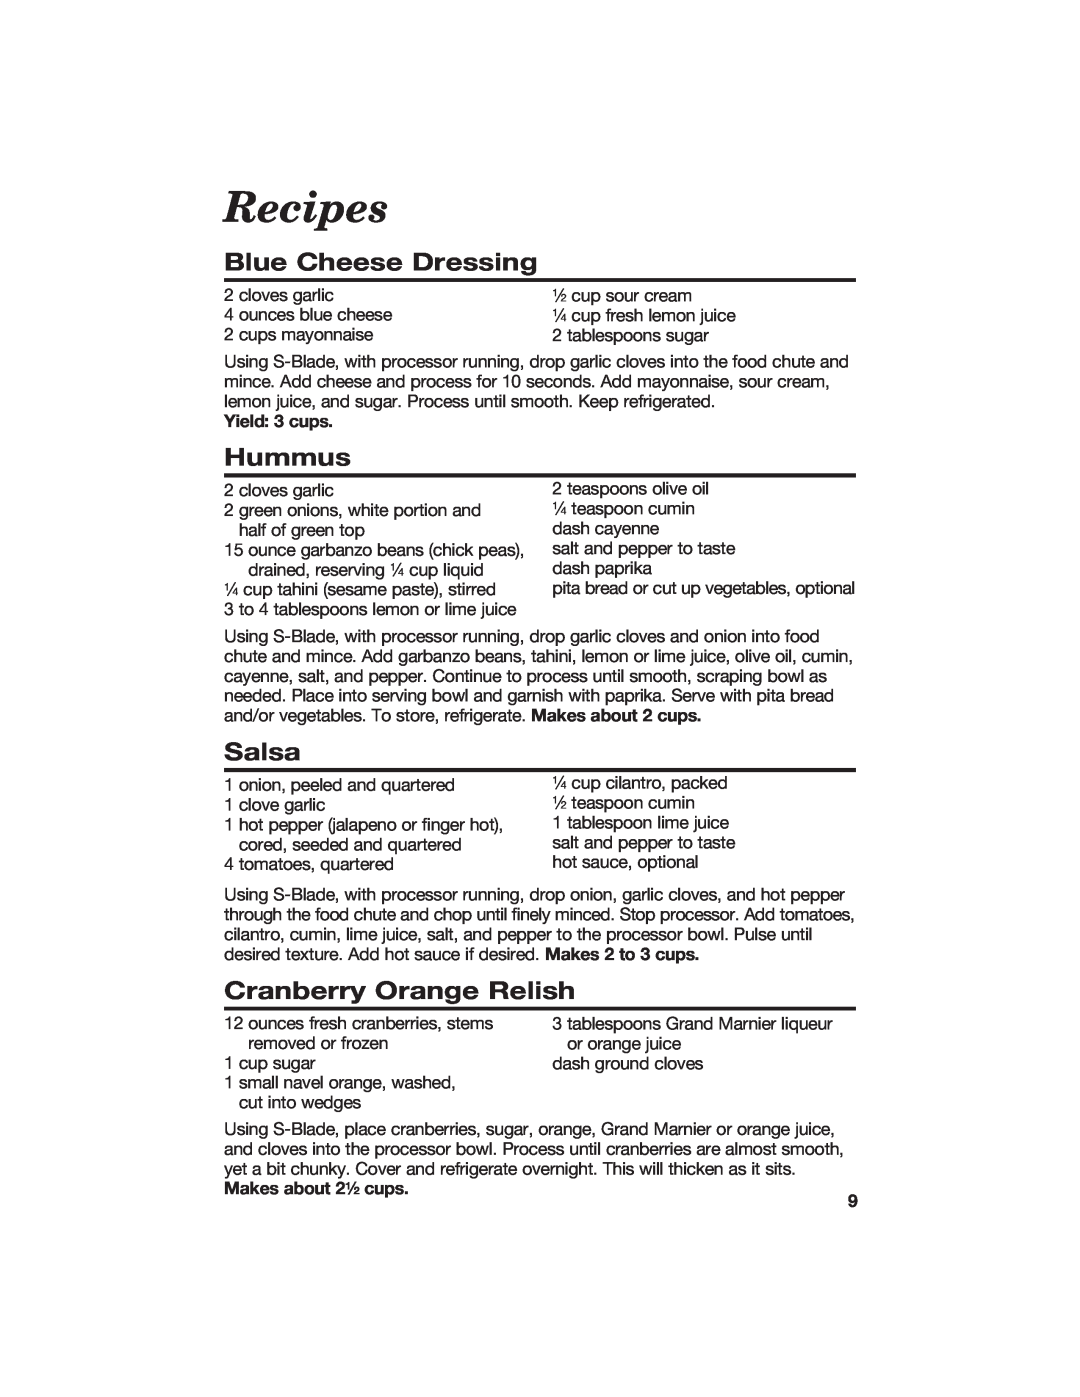 Hamilton Beach 840066200 manual Recipes, Blue Cheese Dressing, Hummus, Salsa, Cranberry Orange Relish, Yield 3 cups 